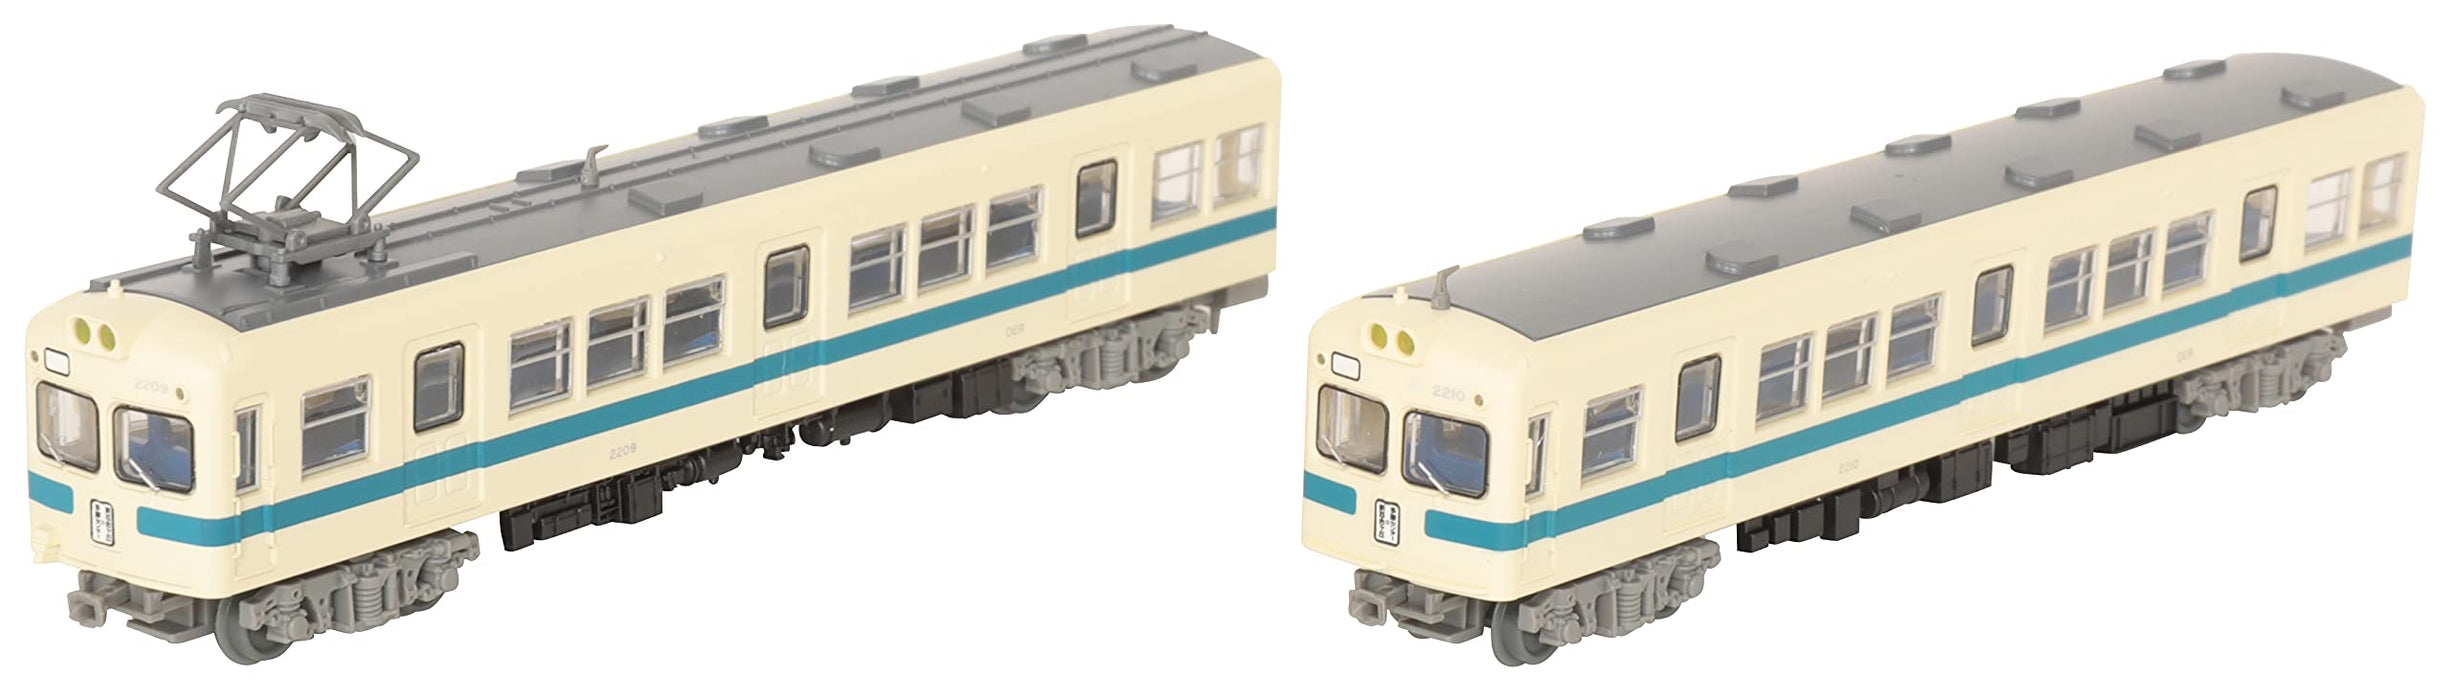 Tomytec Railway Collection - Odakyu Electric Railway Type 2200 2-Car Set A Limited Production 316350